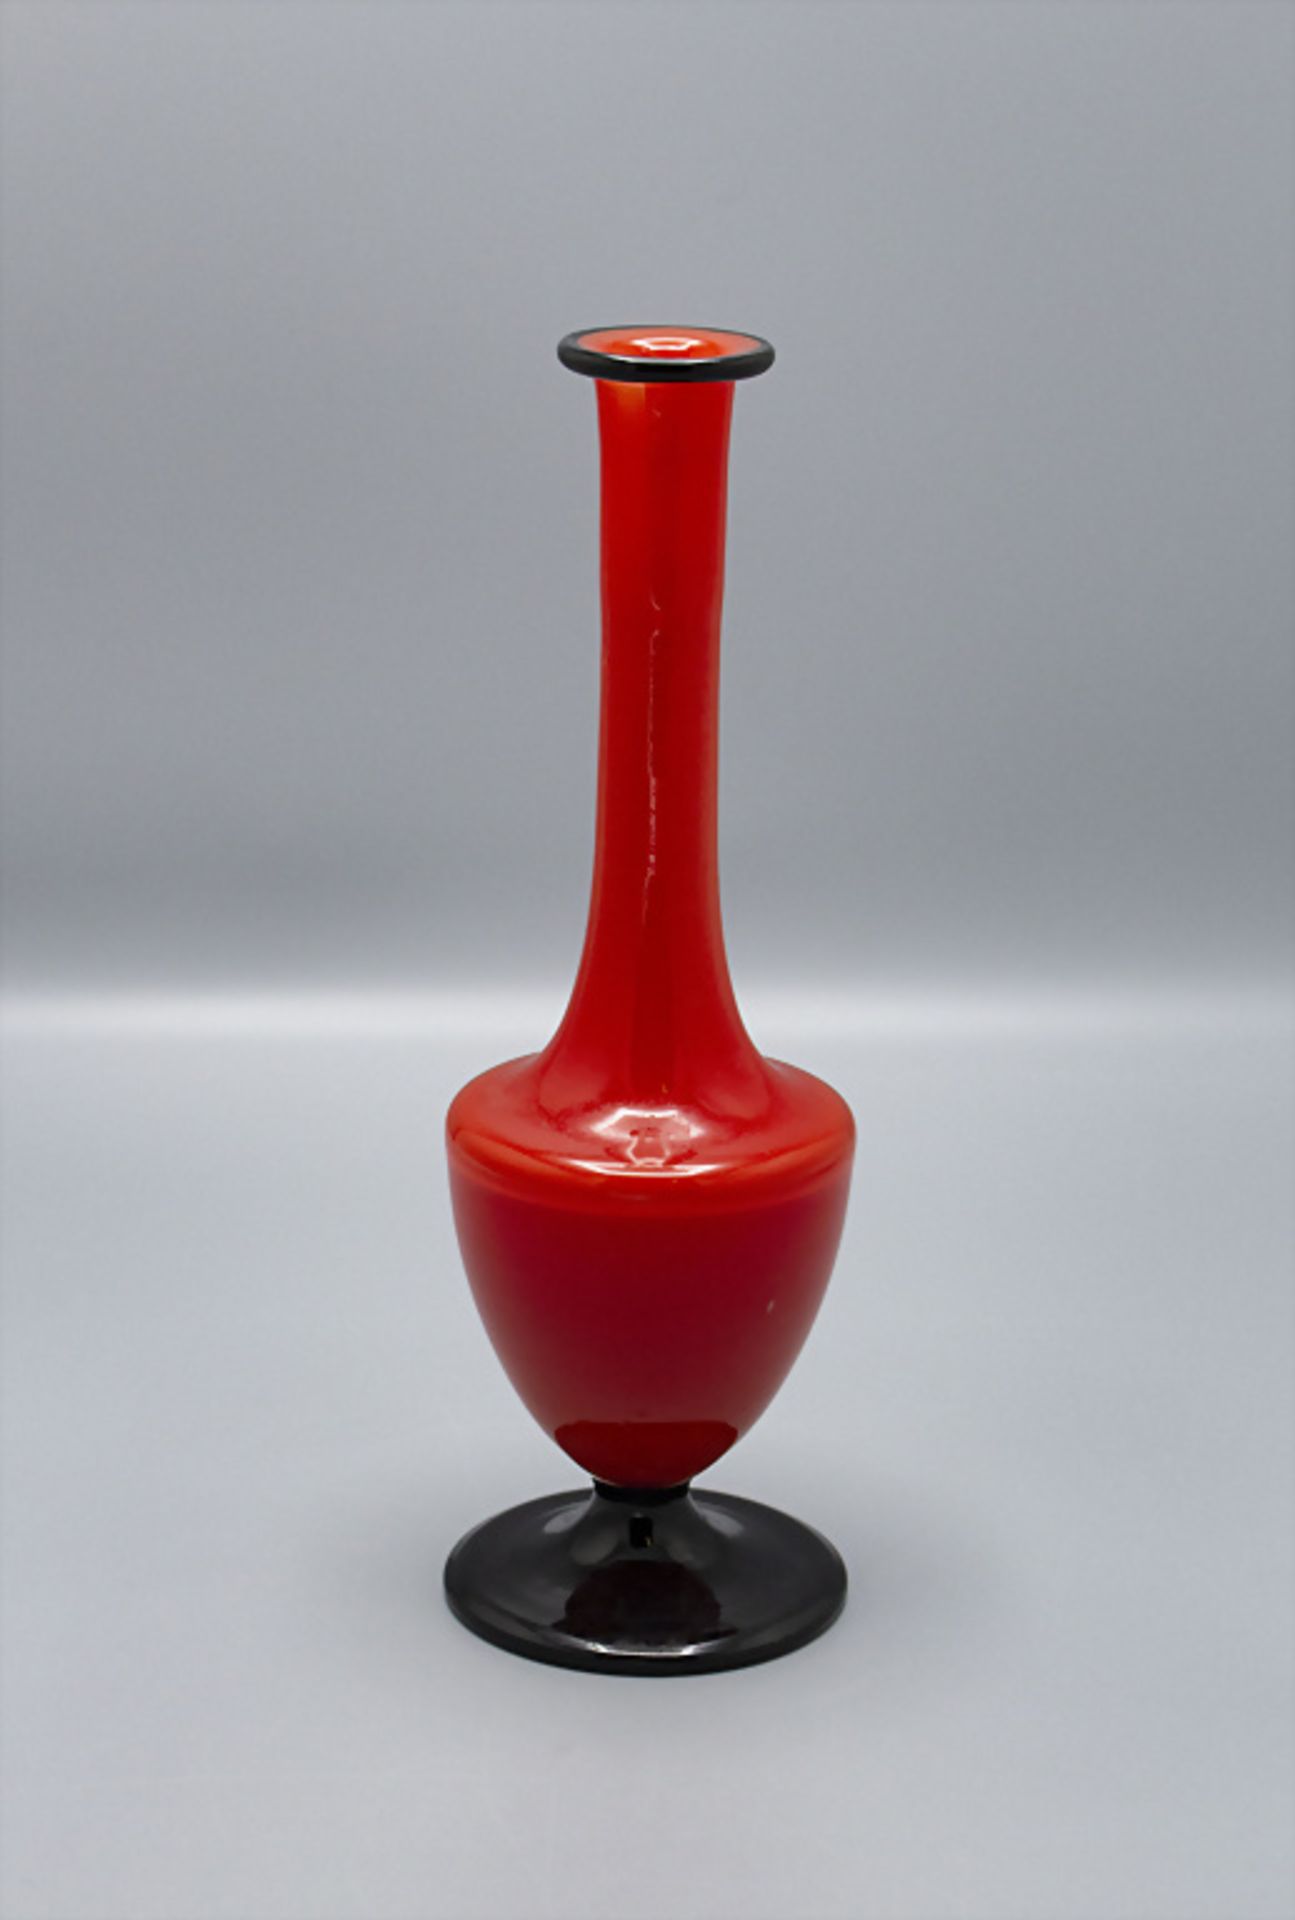 Langhalsvase / A long neck glass vase, 20. Jh. - Image 2 of 4